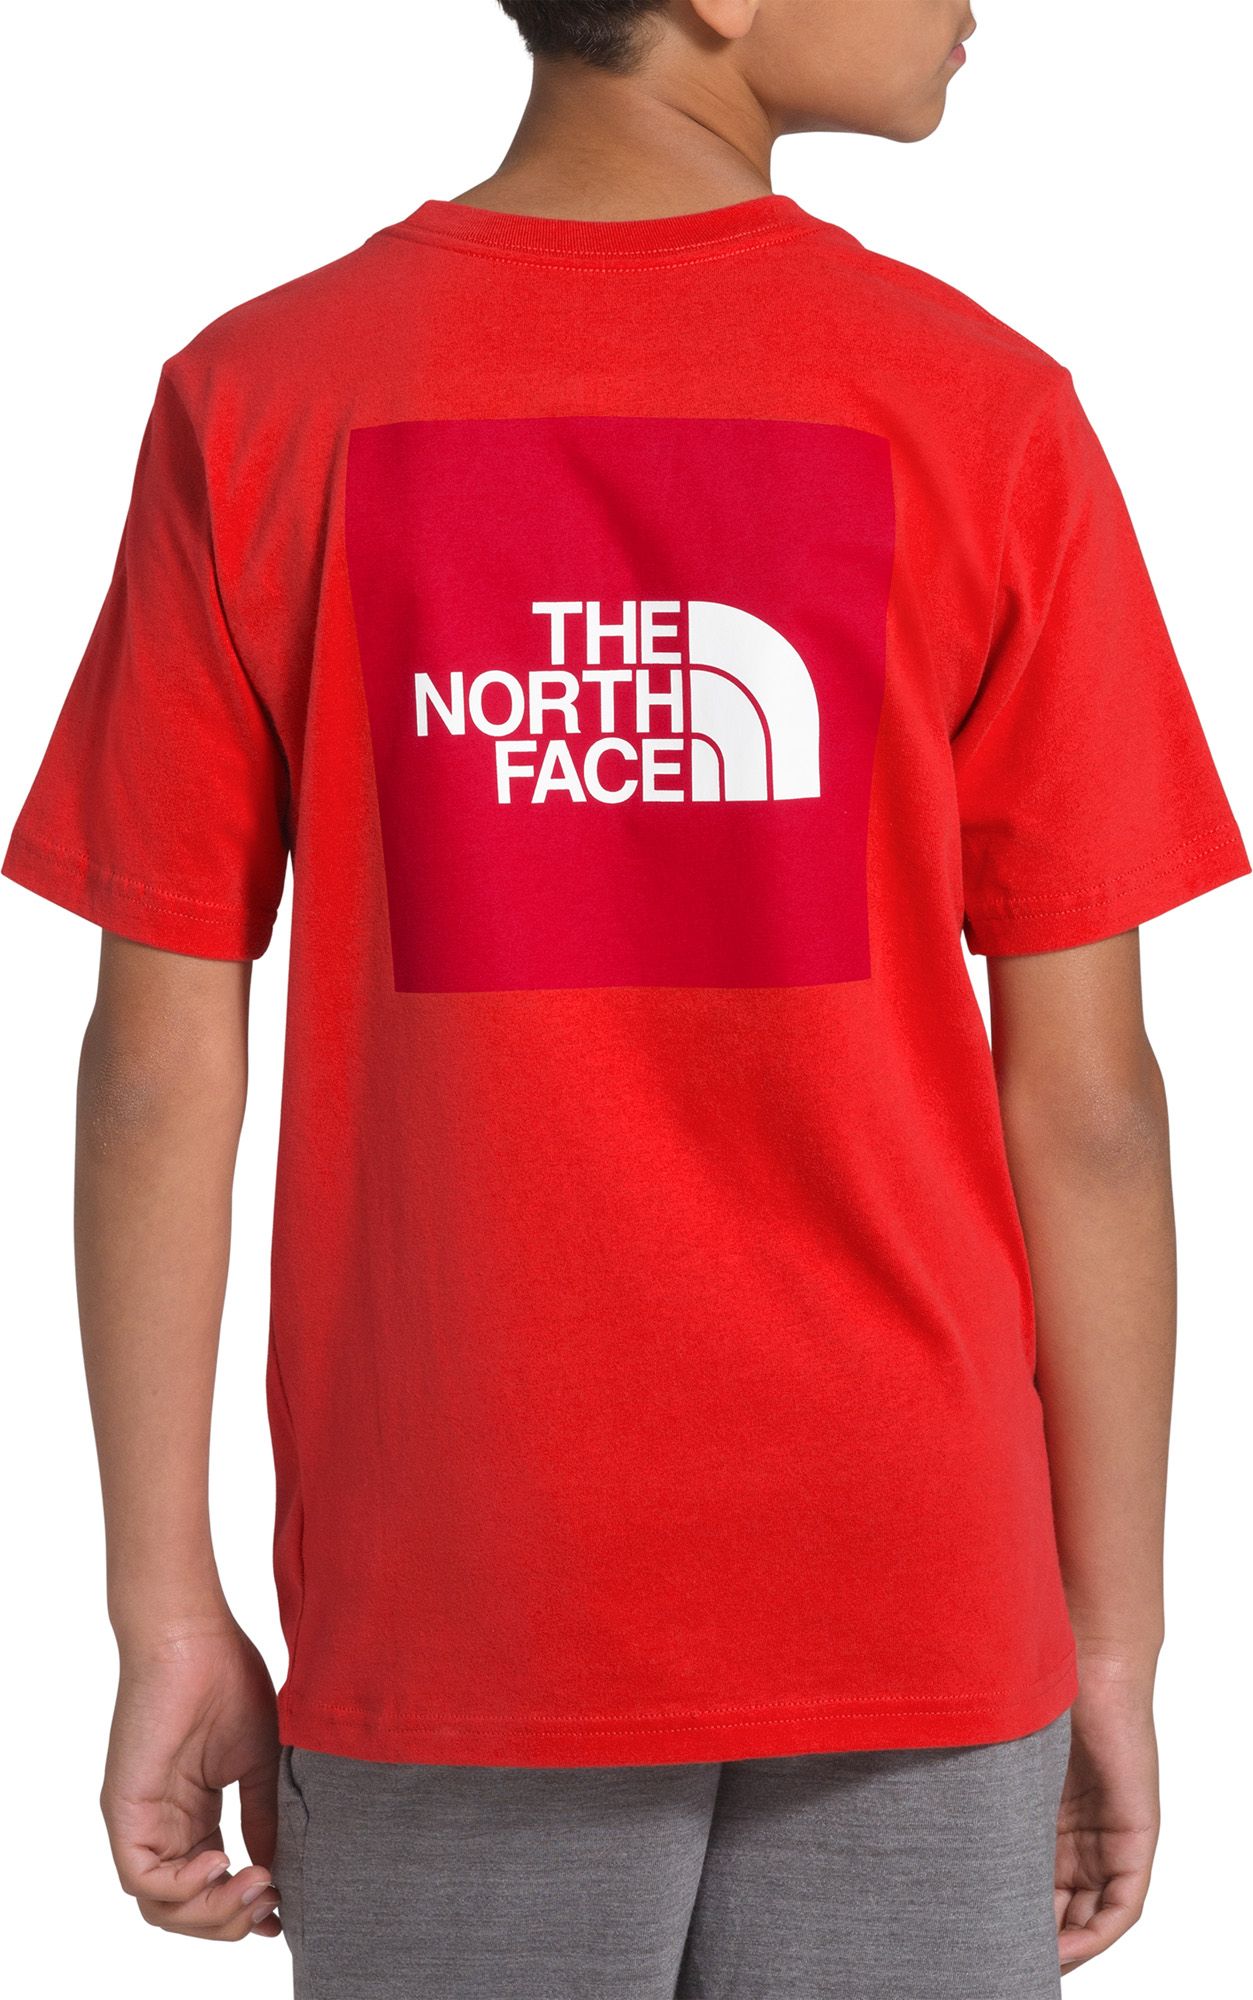 northern face t shirt